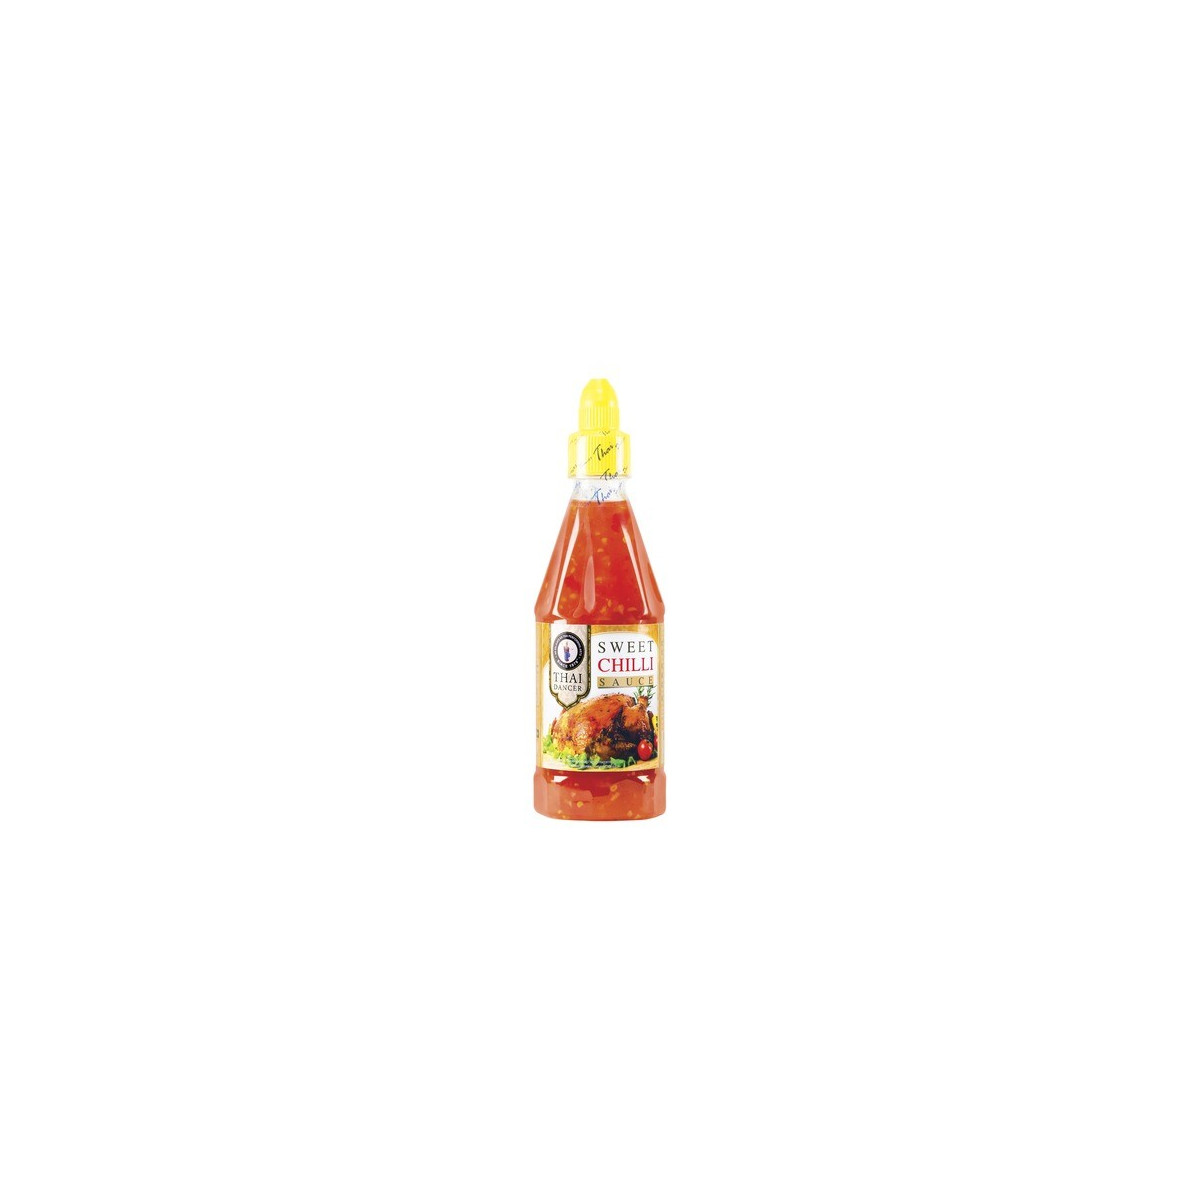 Sweet Chilli Sauce 435ml - Thai Dancer